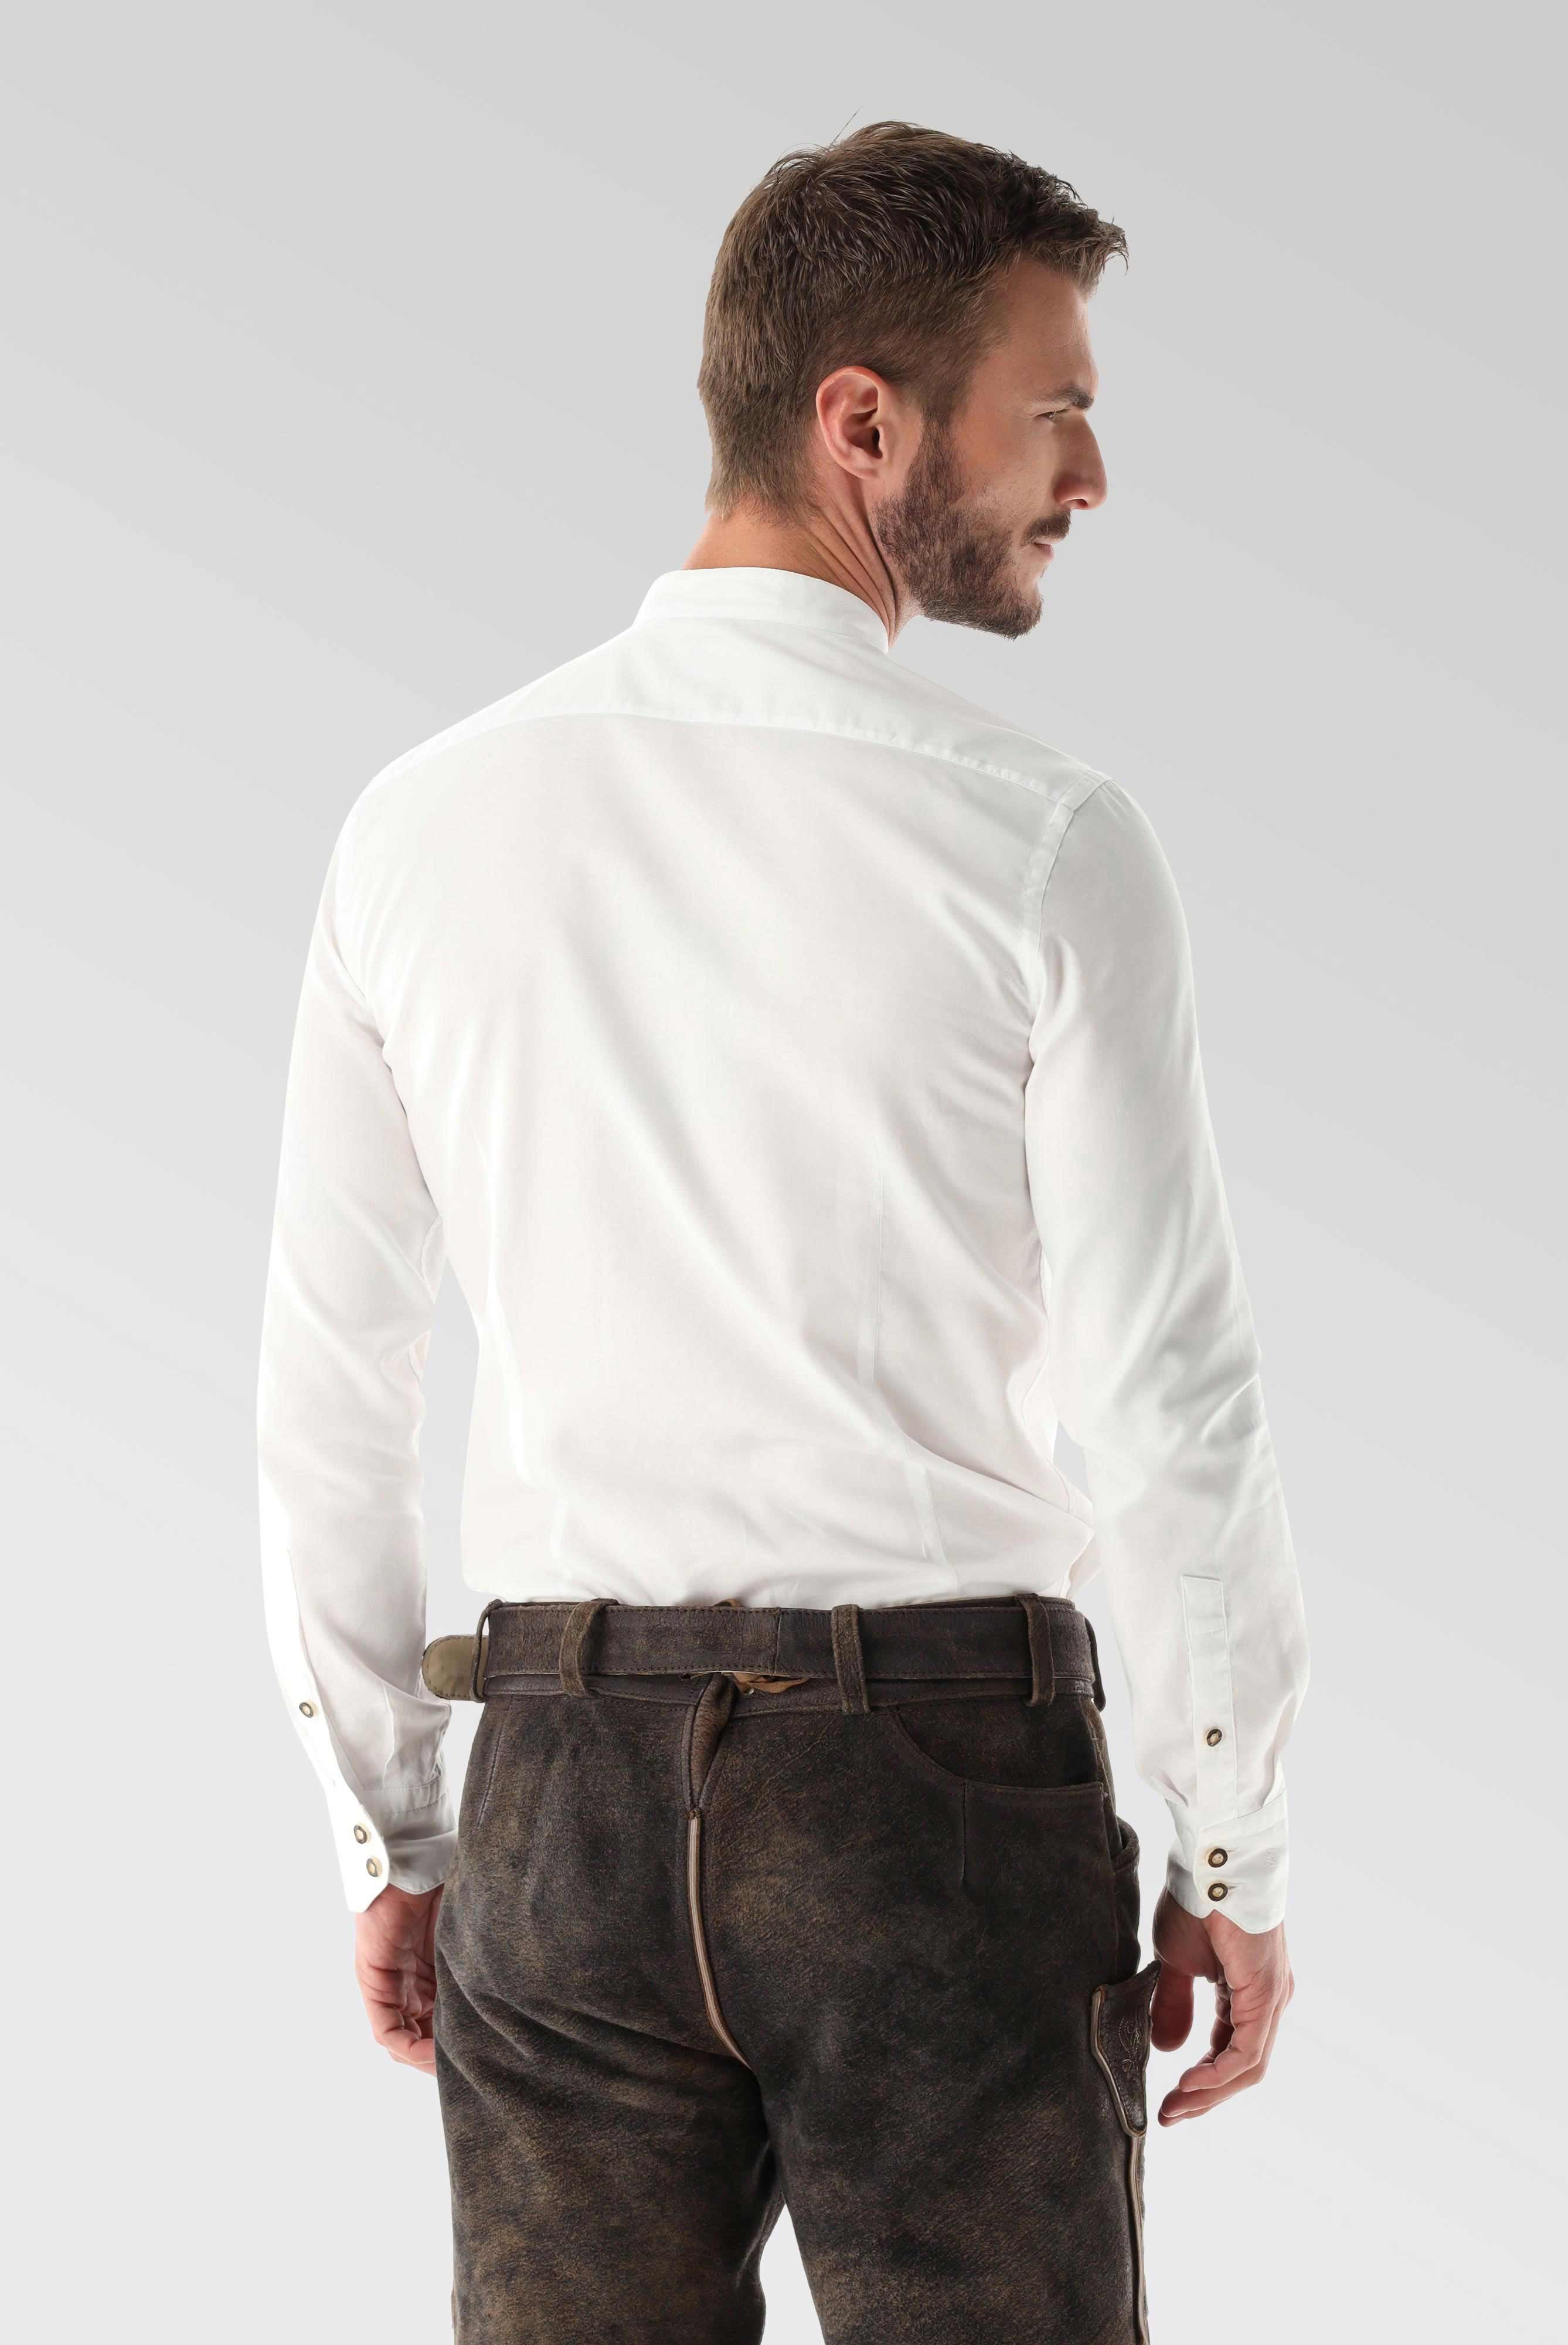 Festliche Hemden+Plain Pin Point Oxford Pleated Traditional Shirt+20.2072.EB.150251.000.38